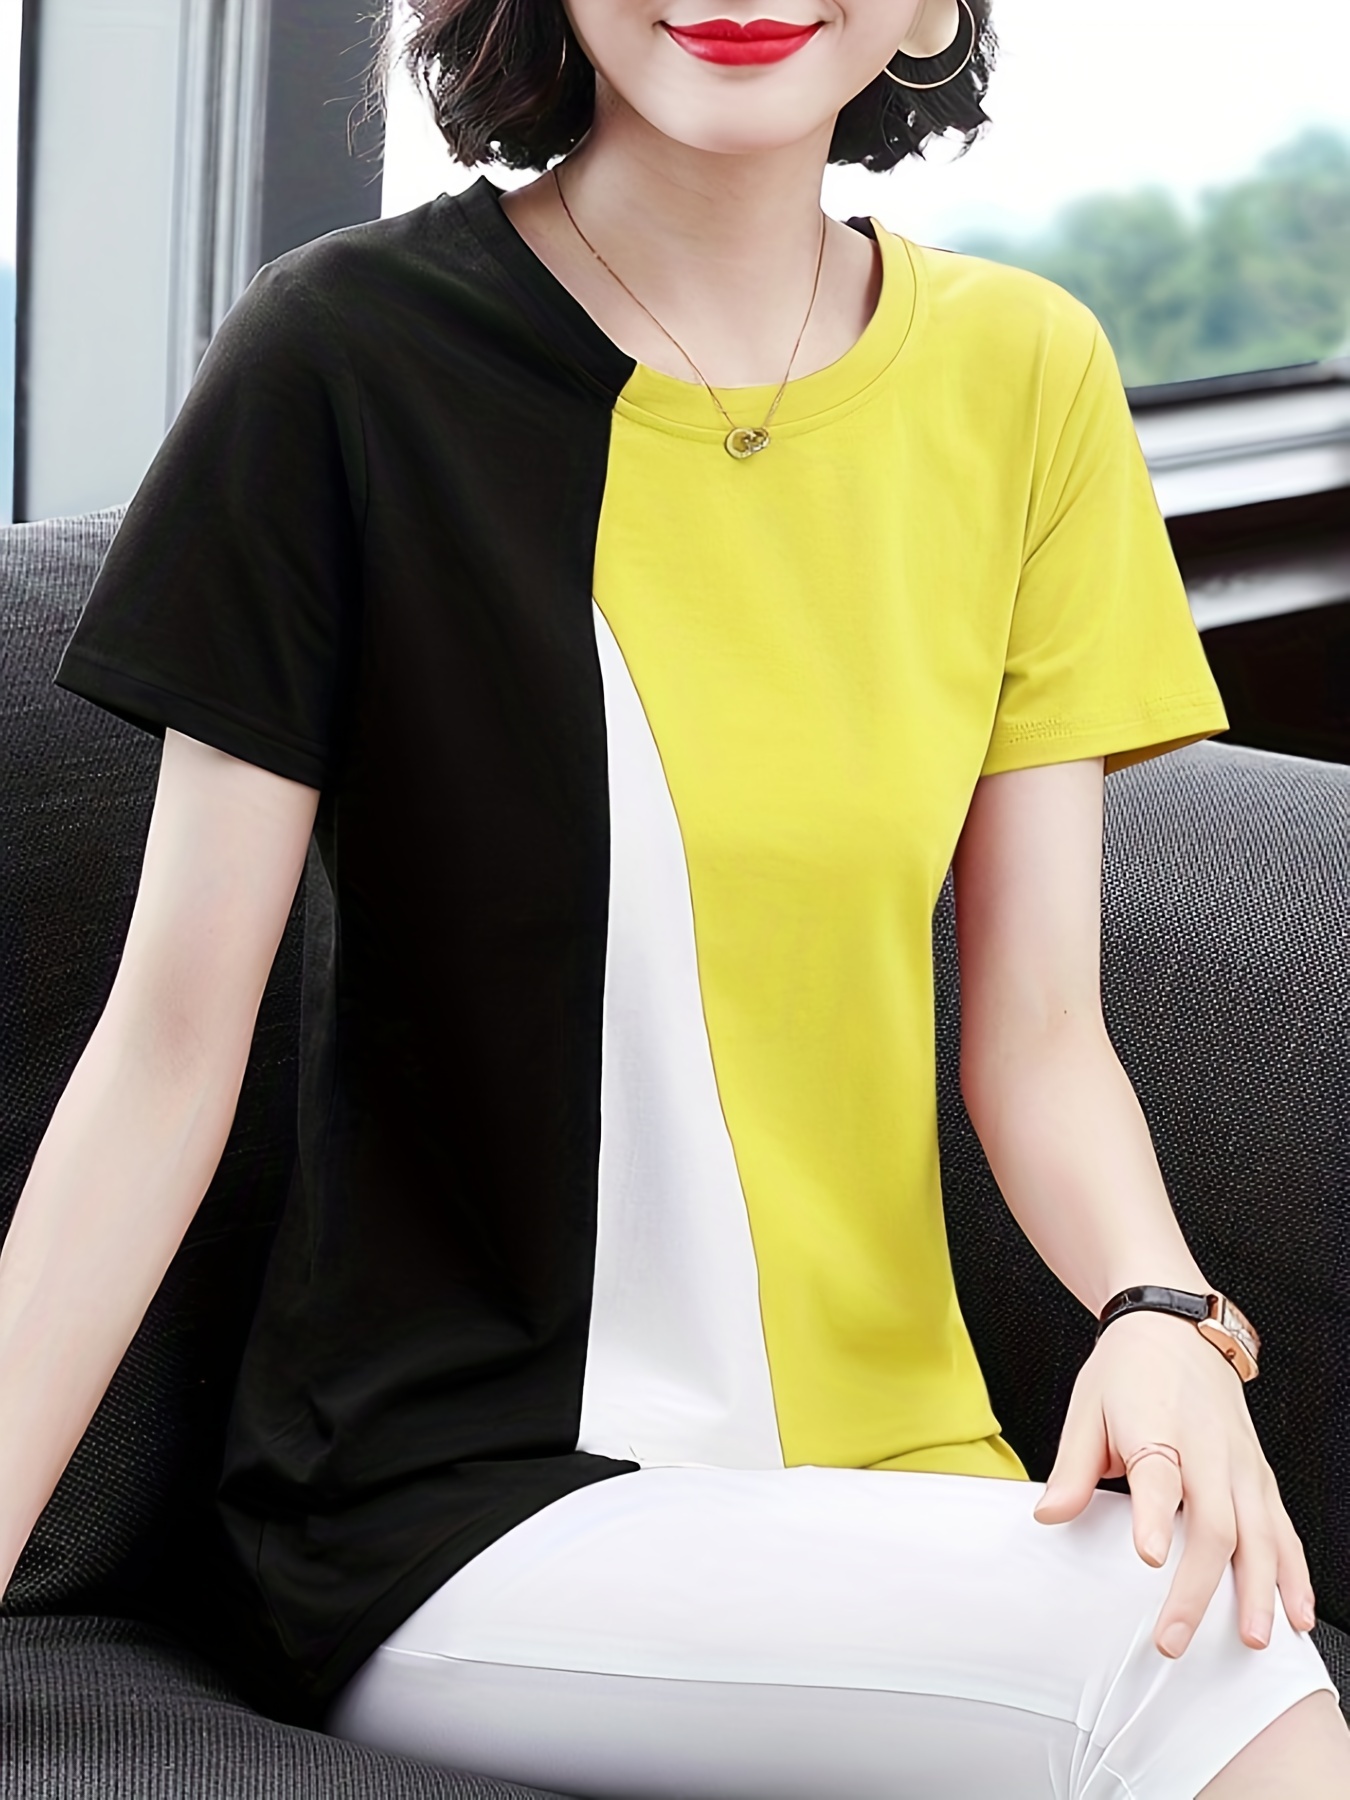 Camiseta de mujer manga corta (colores)